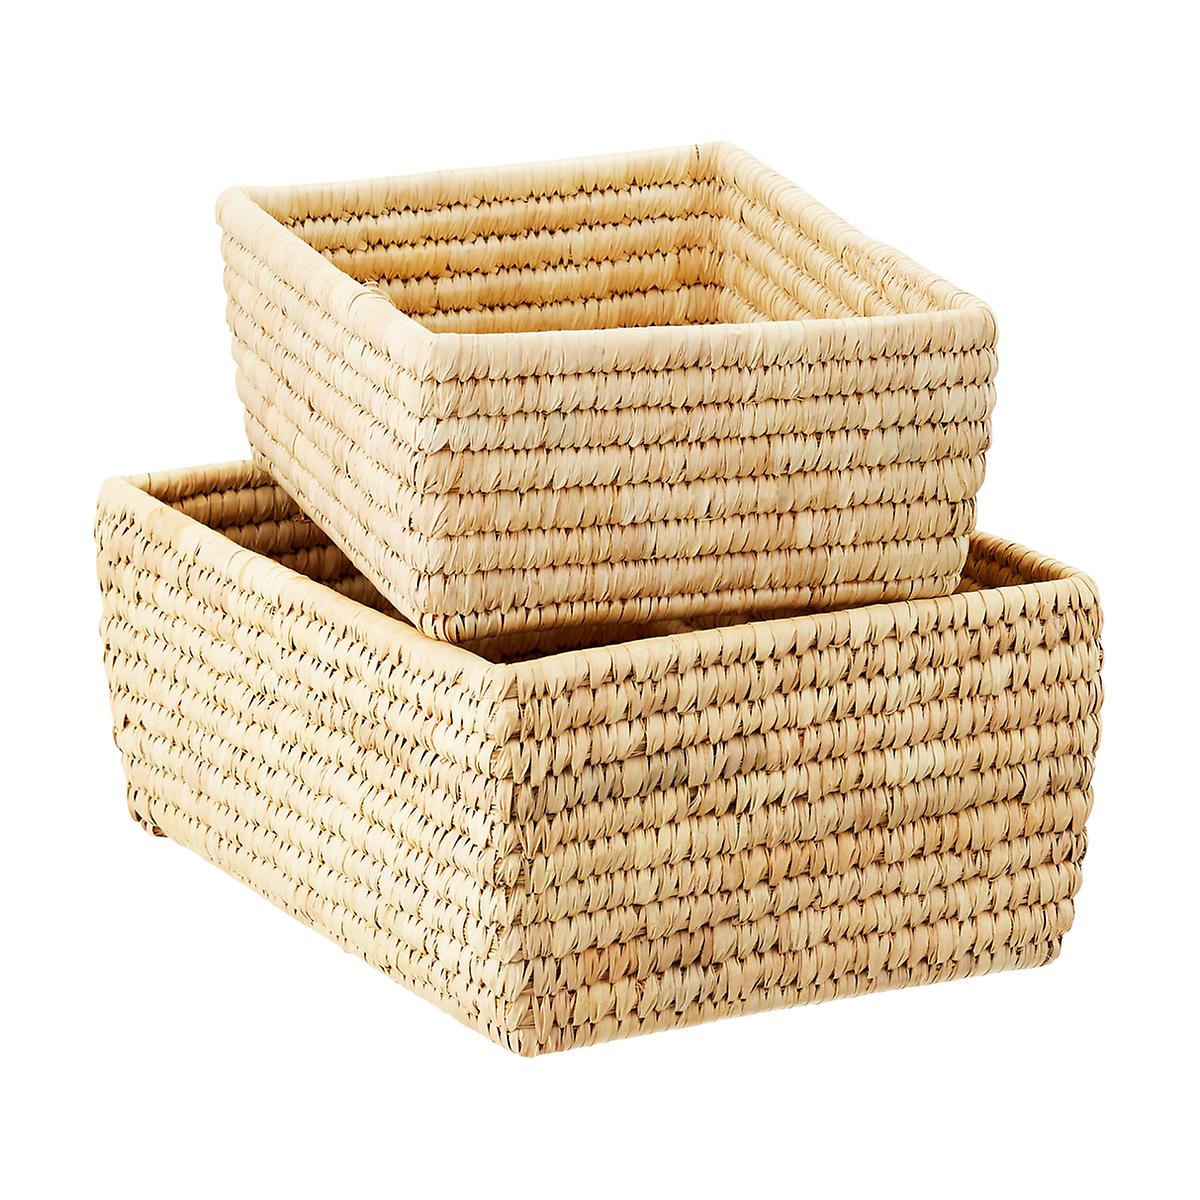 Hand-Woven Palm Link Baskets